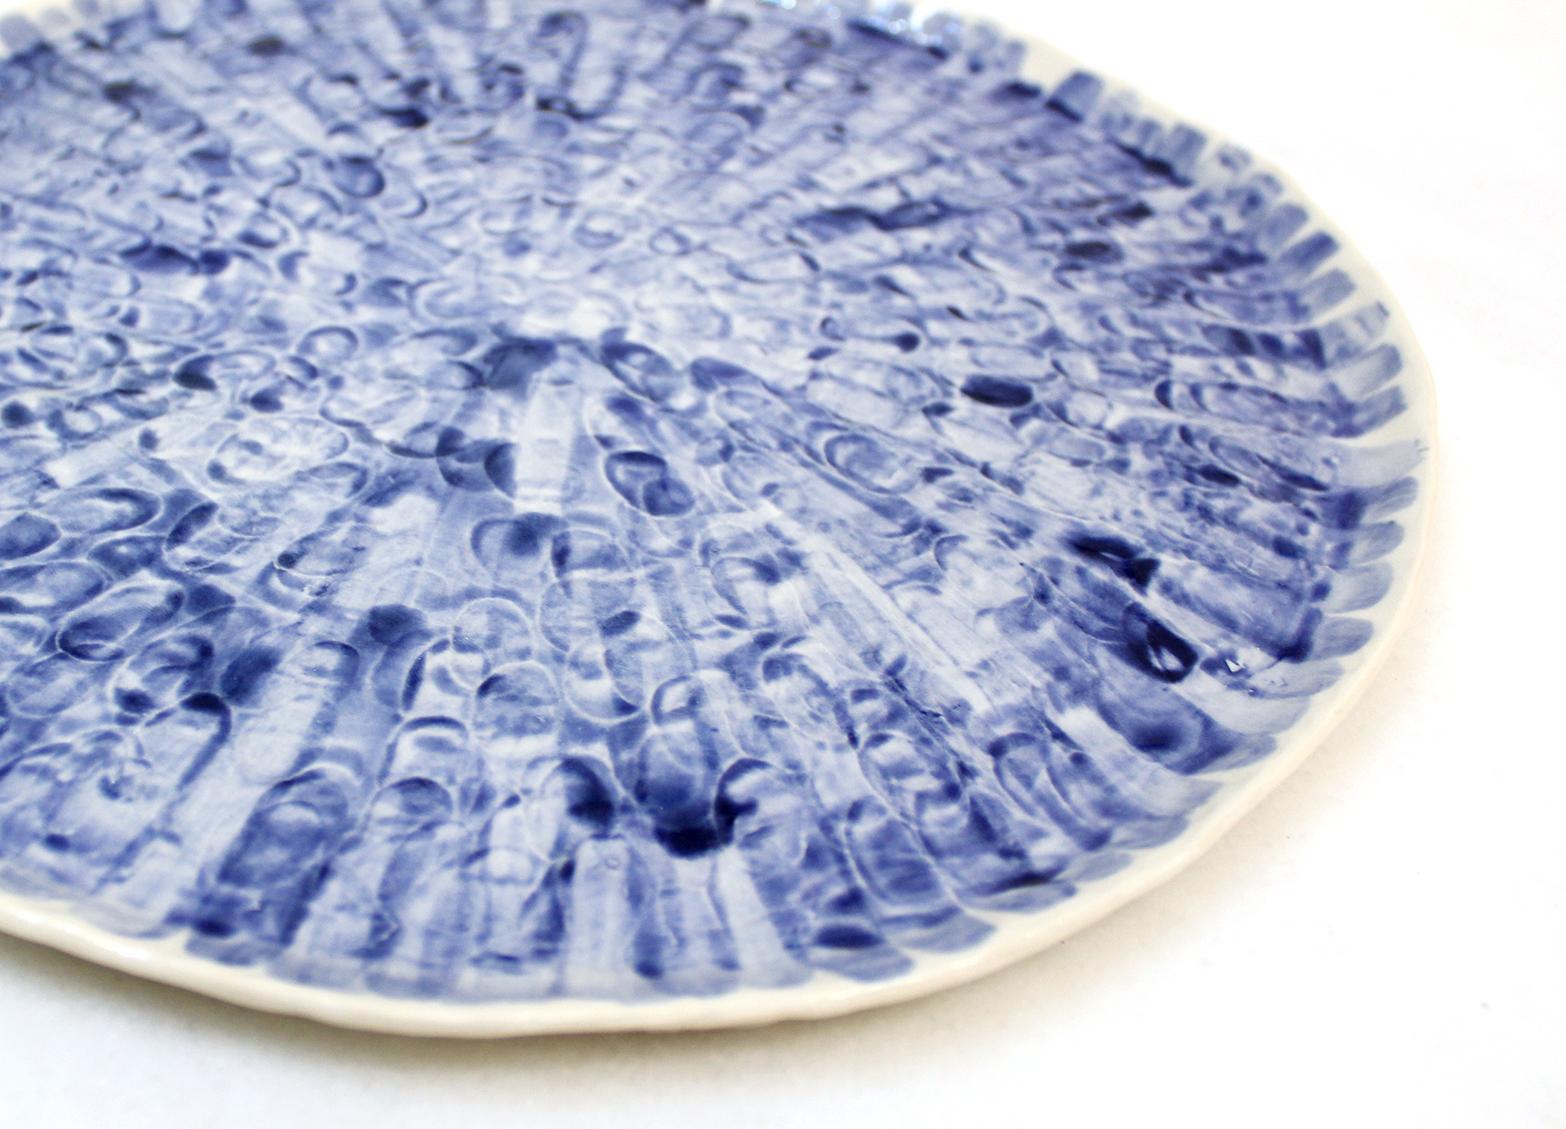 Modern Rhythm Platter #1 by Isabel Halley, White Porcelain with Cobalt Glaze